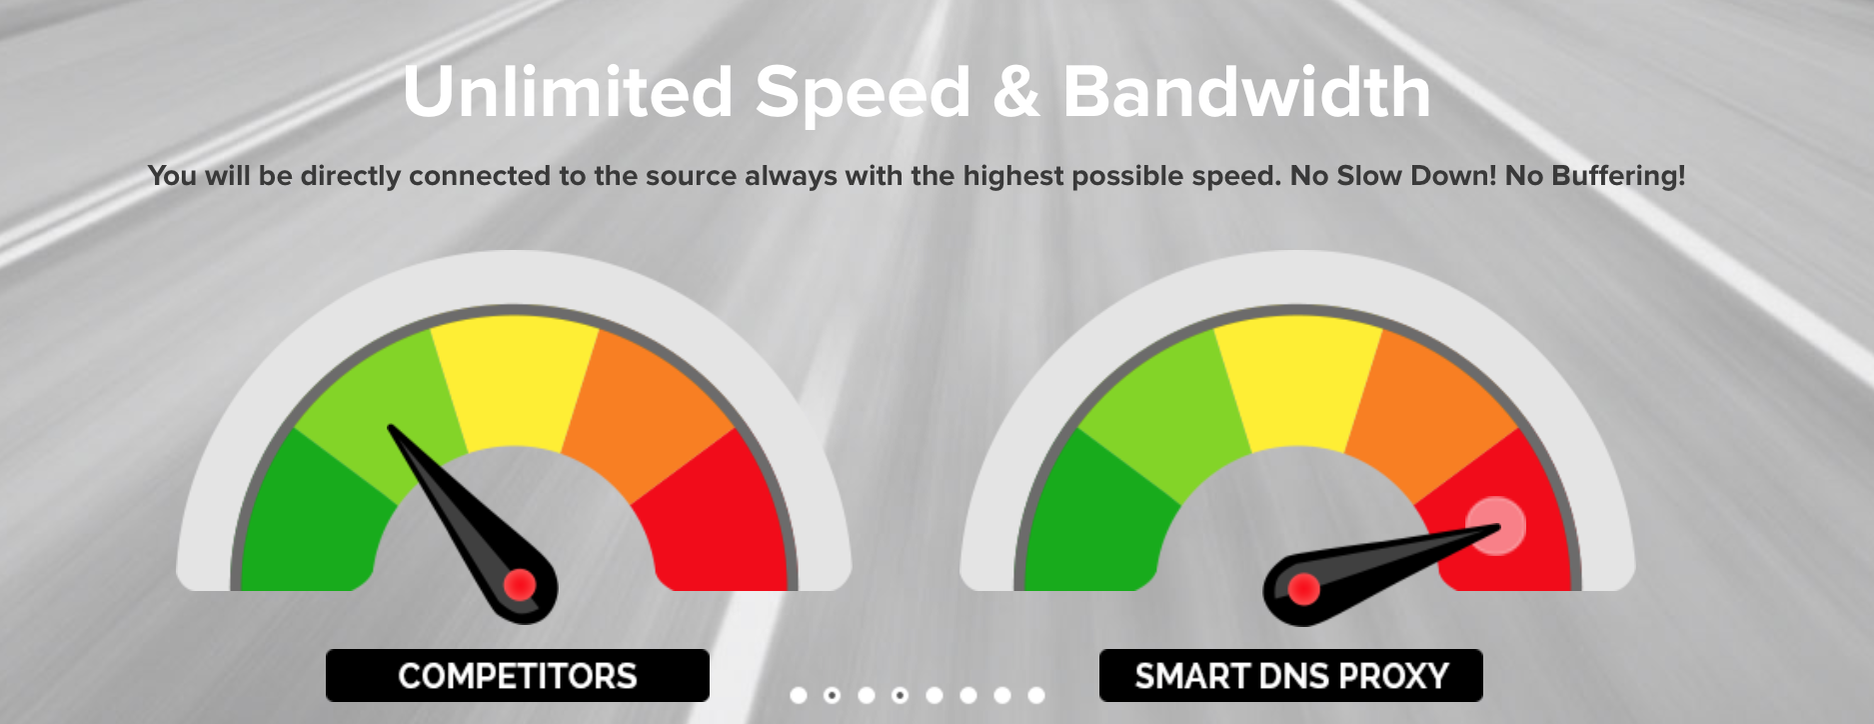 Unlimited bandwidth 